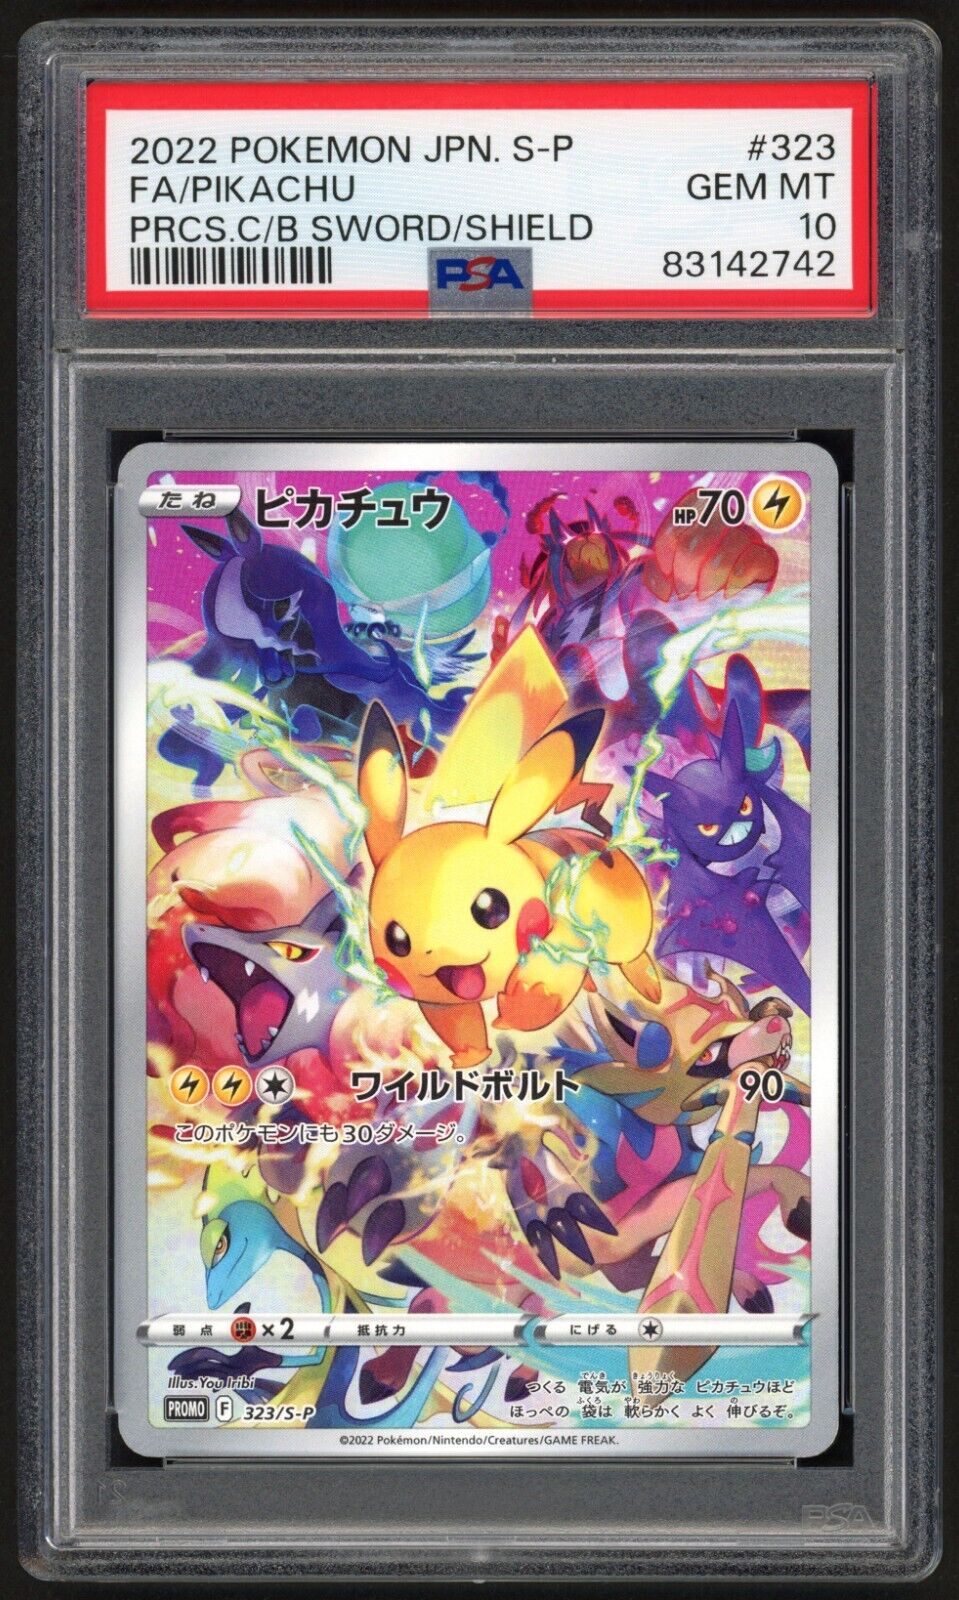 Pikachu 323SP Pokemon Precious Collector Box Promo Japanese GEM MINT PSA 10